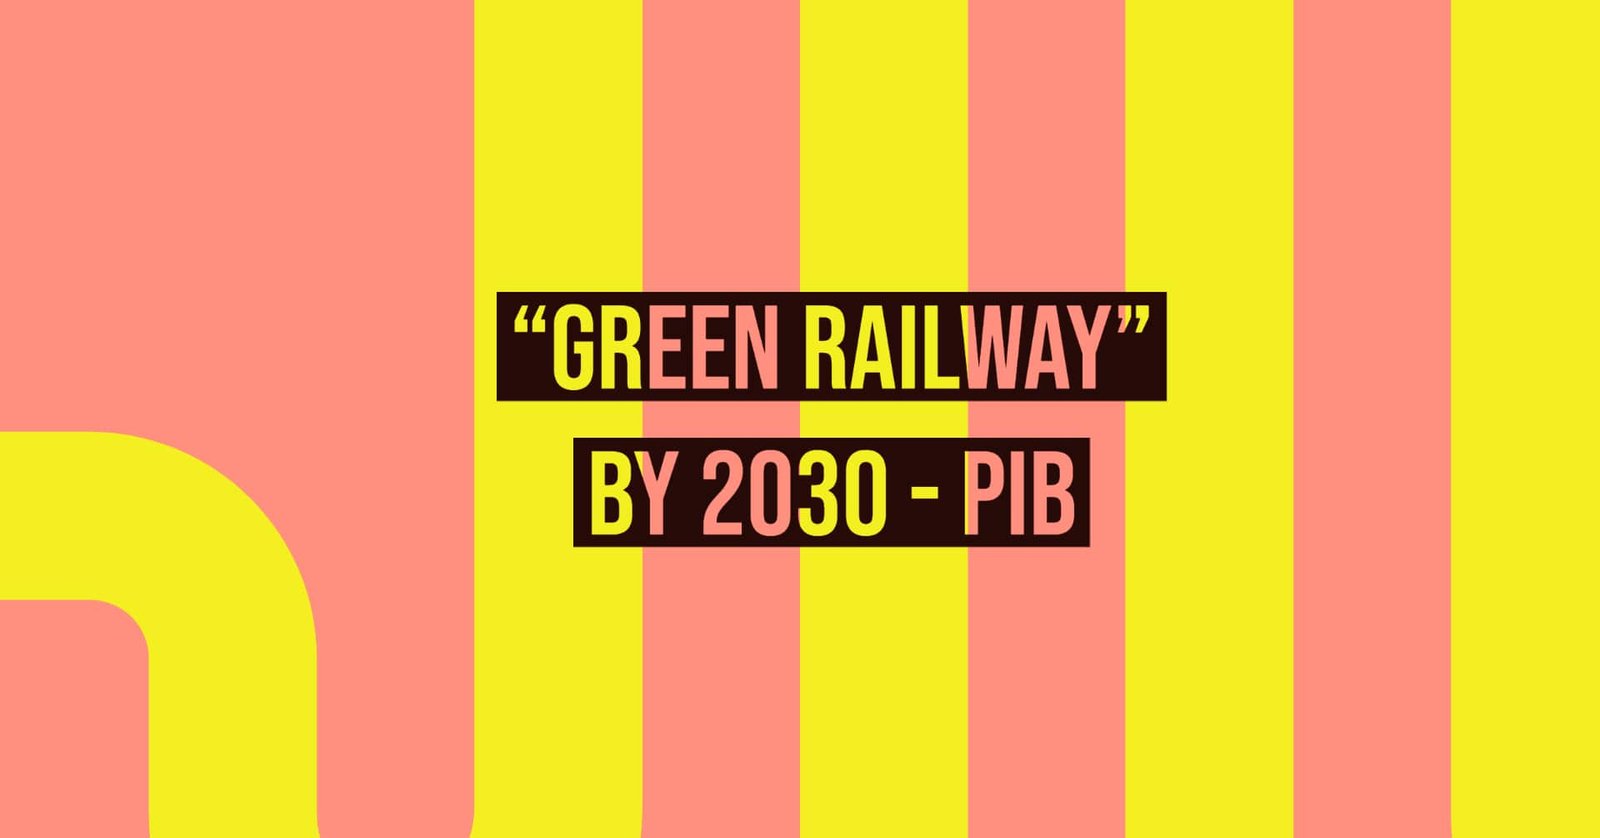 Green Railway by 2030 - PIB